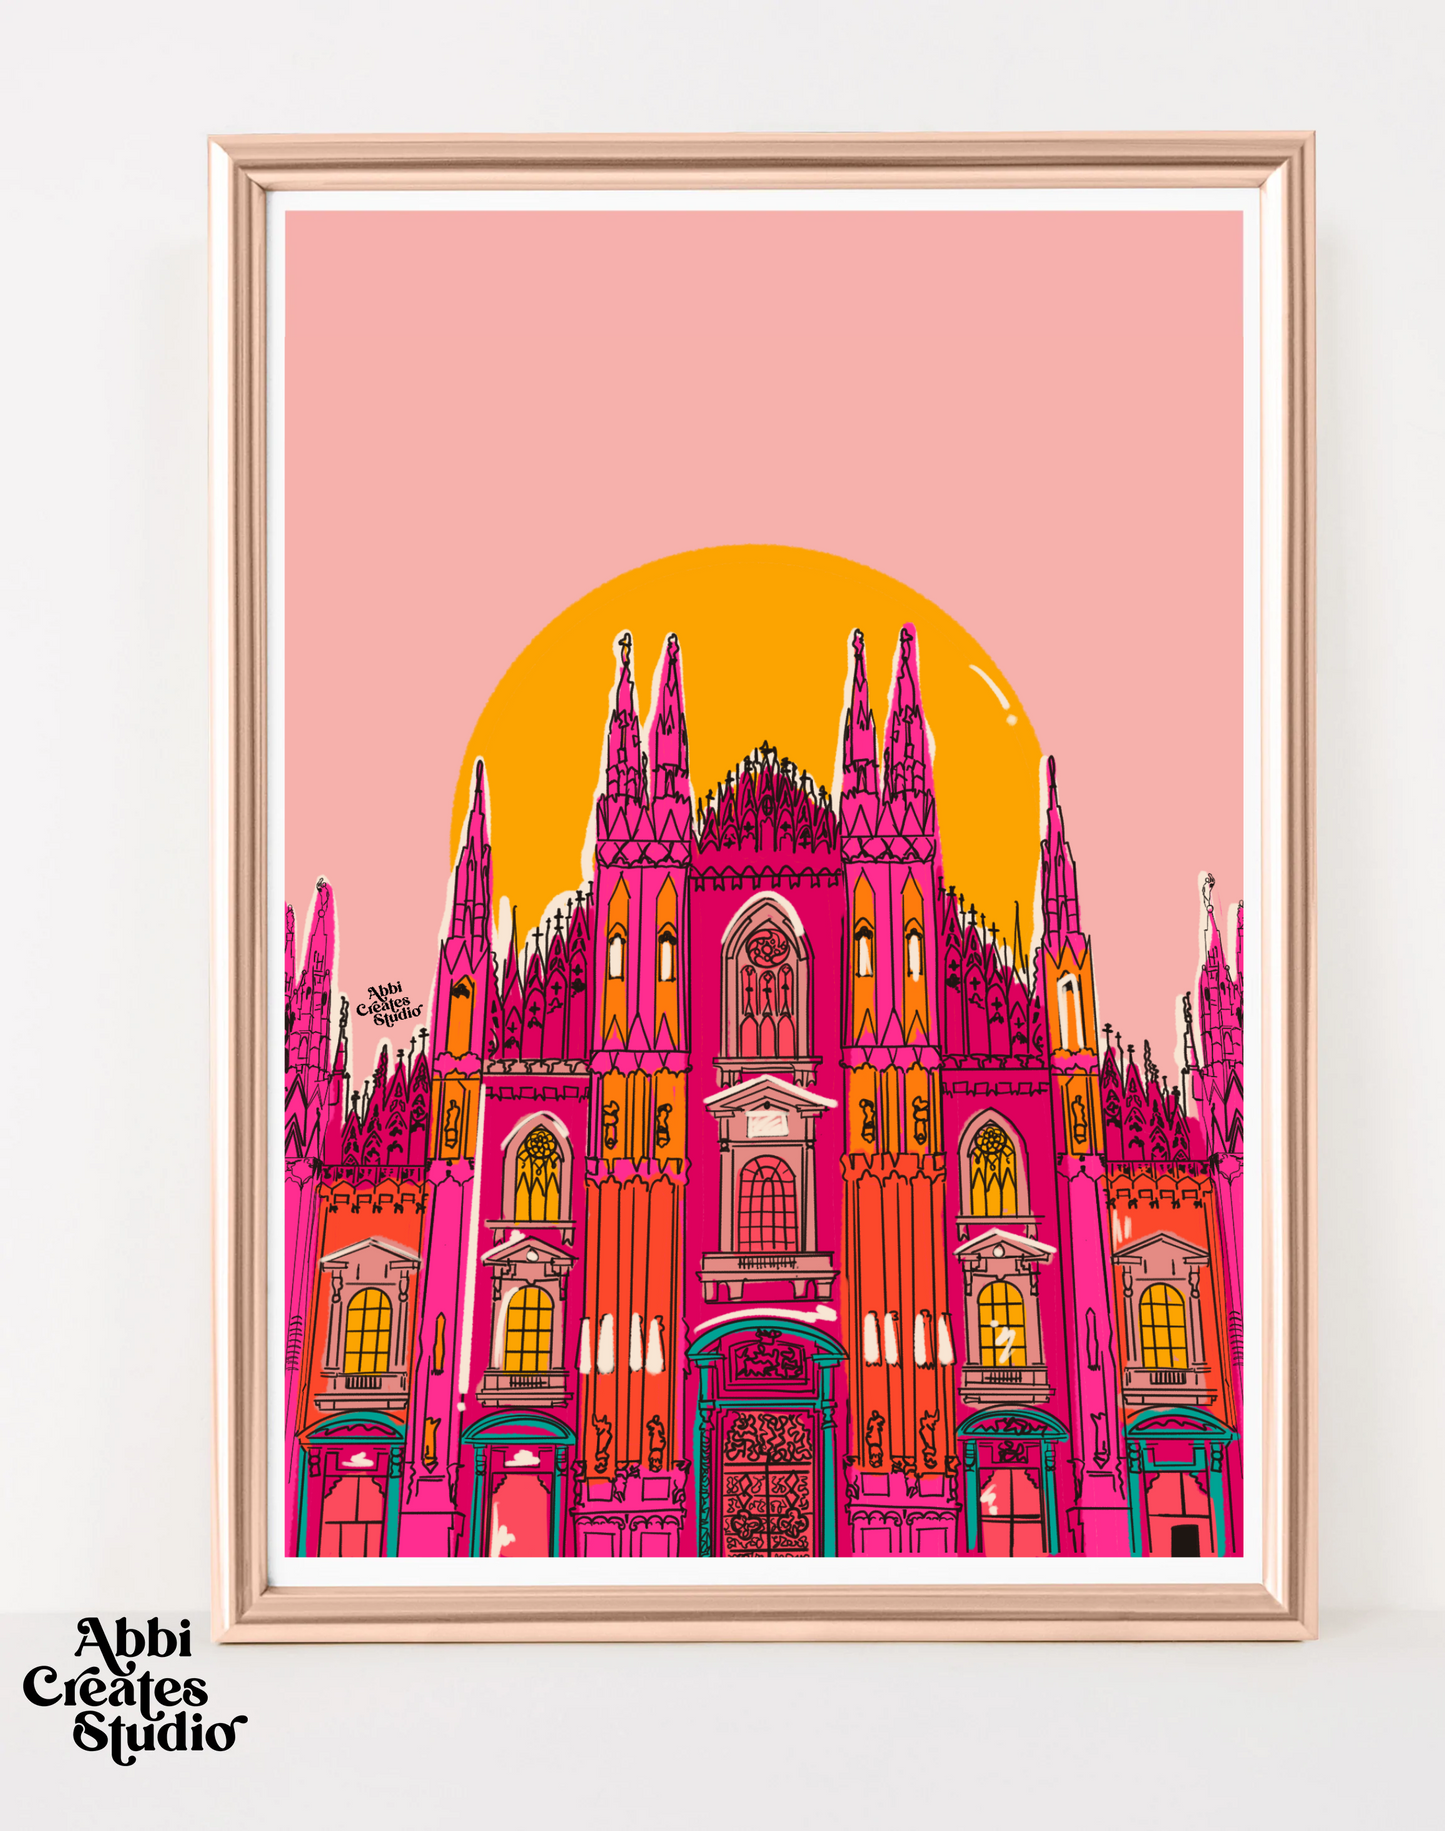 Milan - Duomo di Milano Art print - Abbicreates Studio